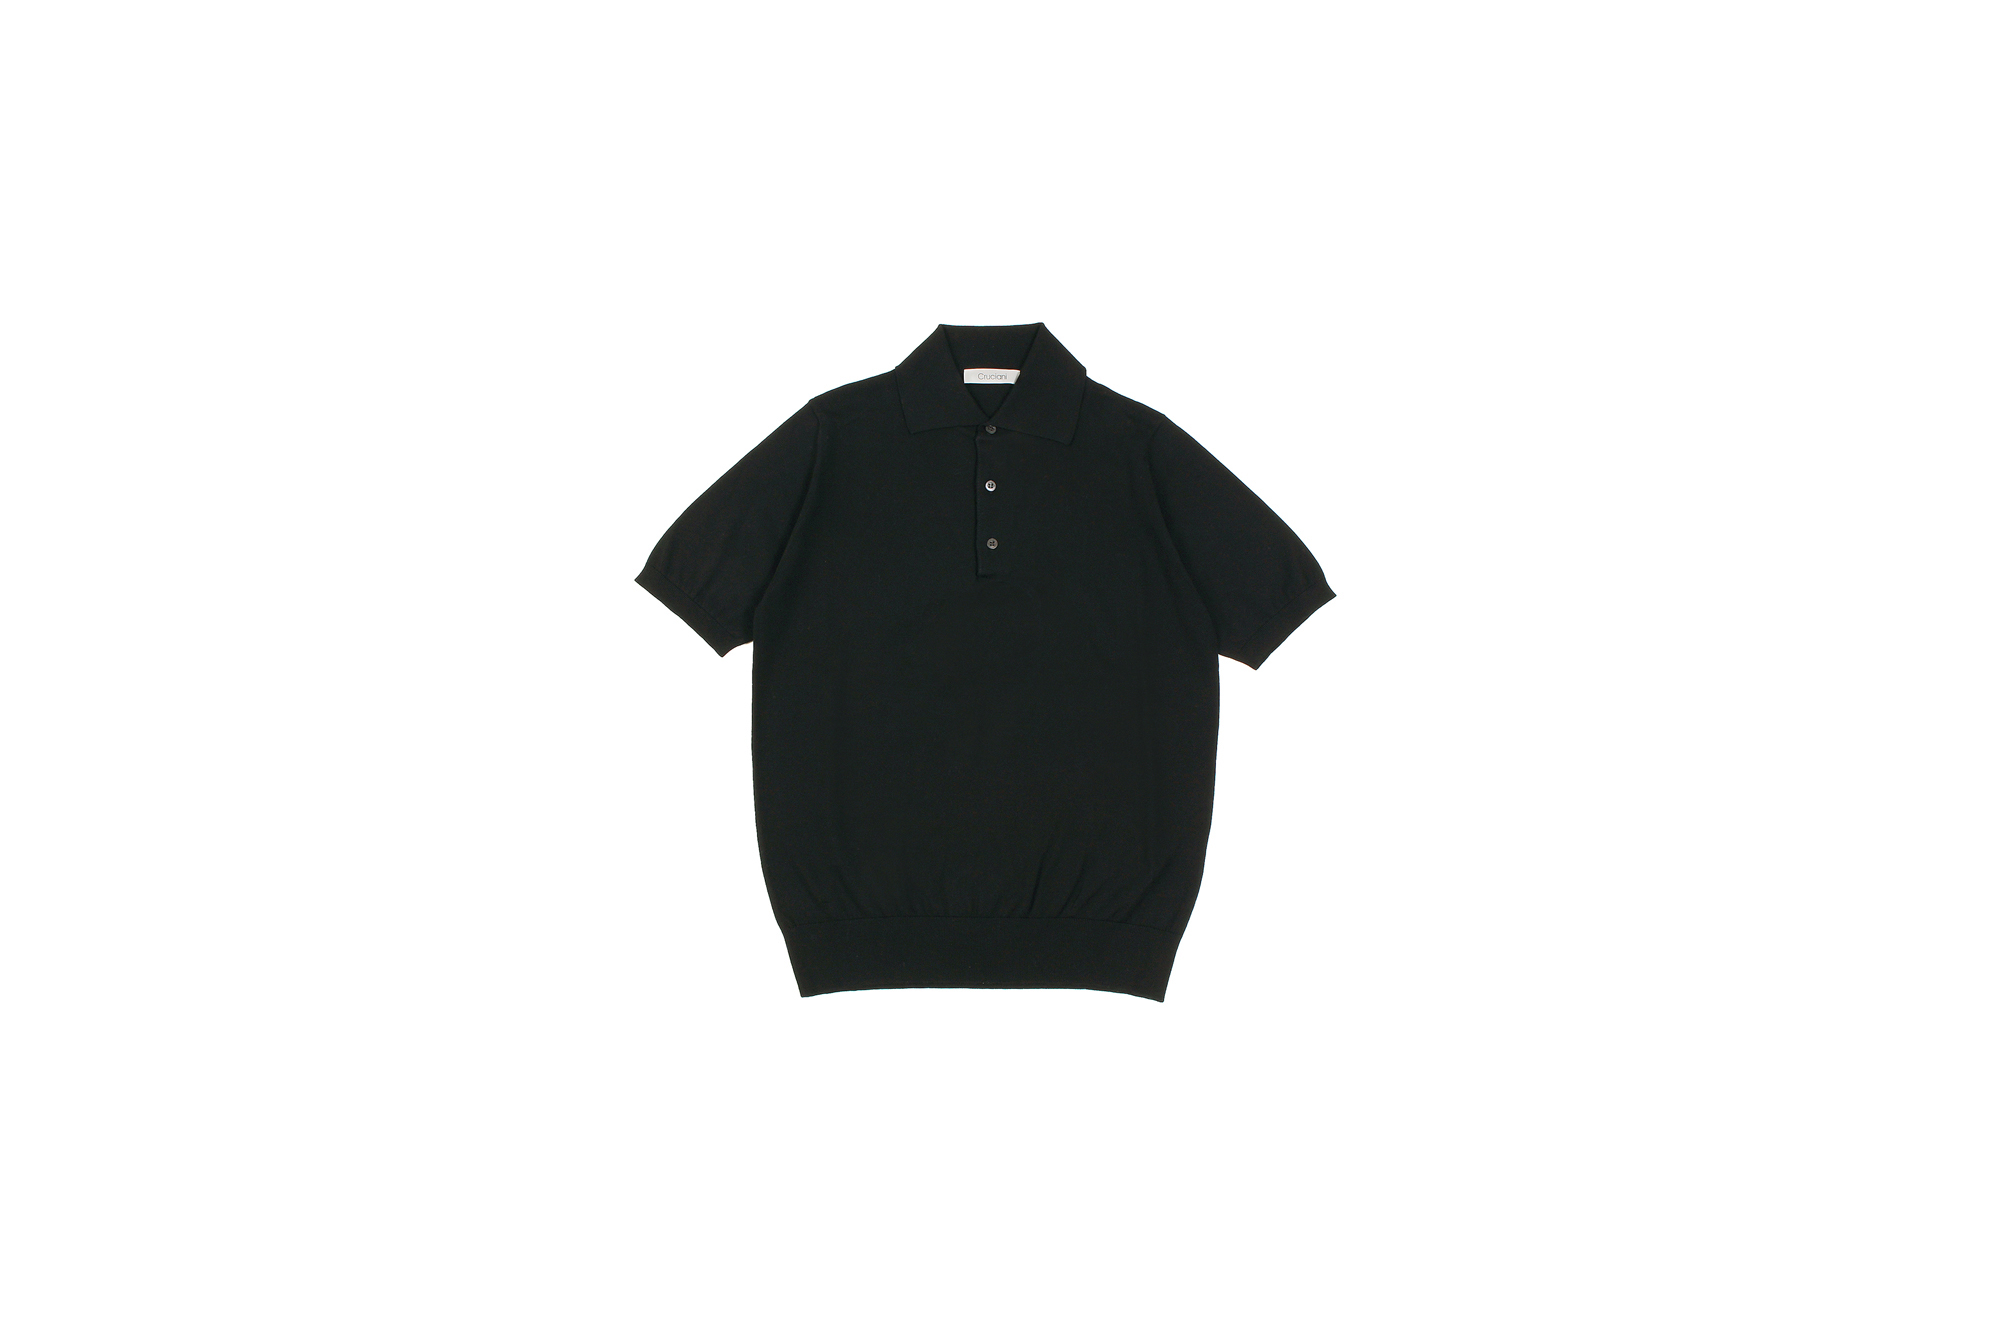 Cruciani(クルチアーニ) 33G Knit Polo Shirt 33ゲージ コットン ニット ポロシャツ BLACK (ブラック・Z0048) made in italy (イタリア製) 2020 春夏新作 愛知 名古屋 altoediritto アルトエデリット